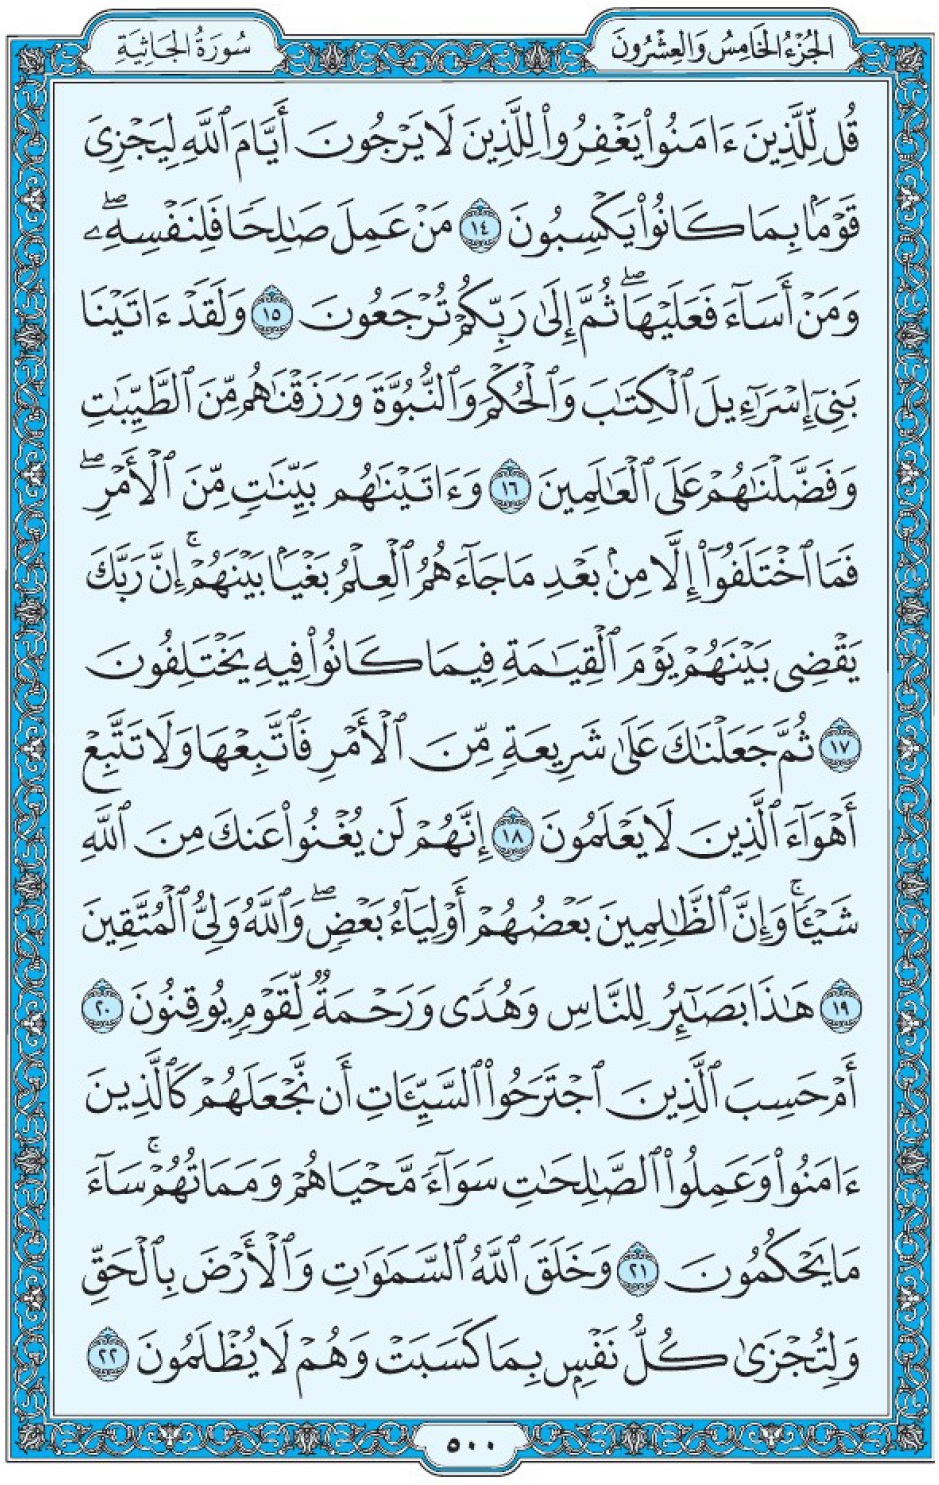 Коран Мединский мусхаф страница 500, Аль-Джясия, аят 14-22